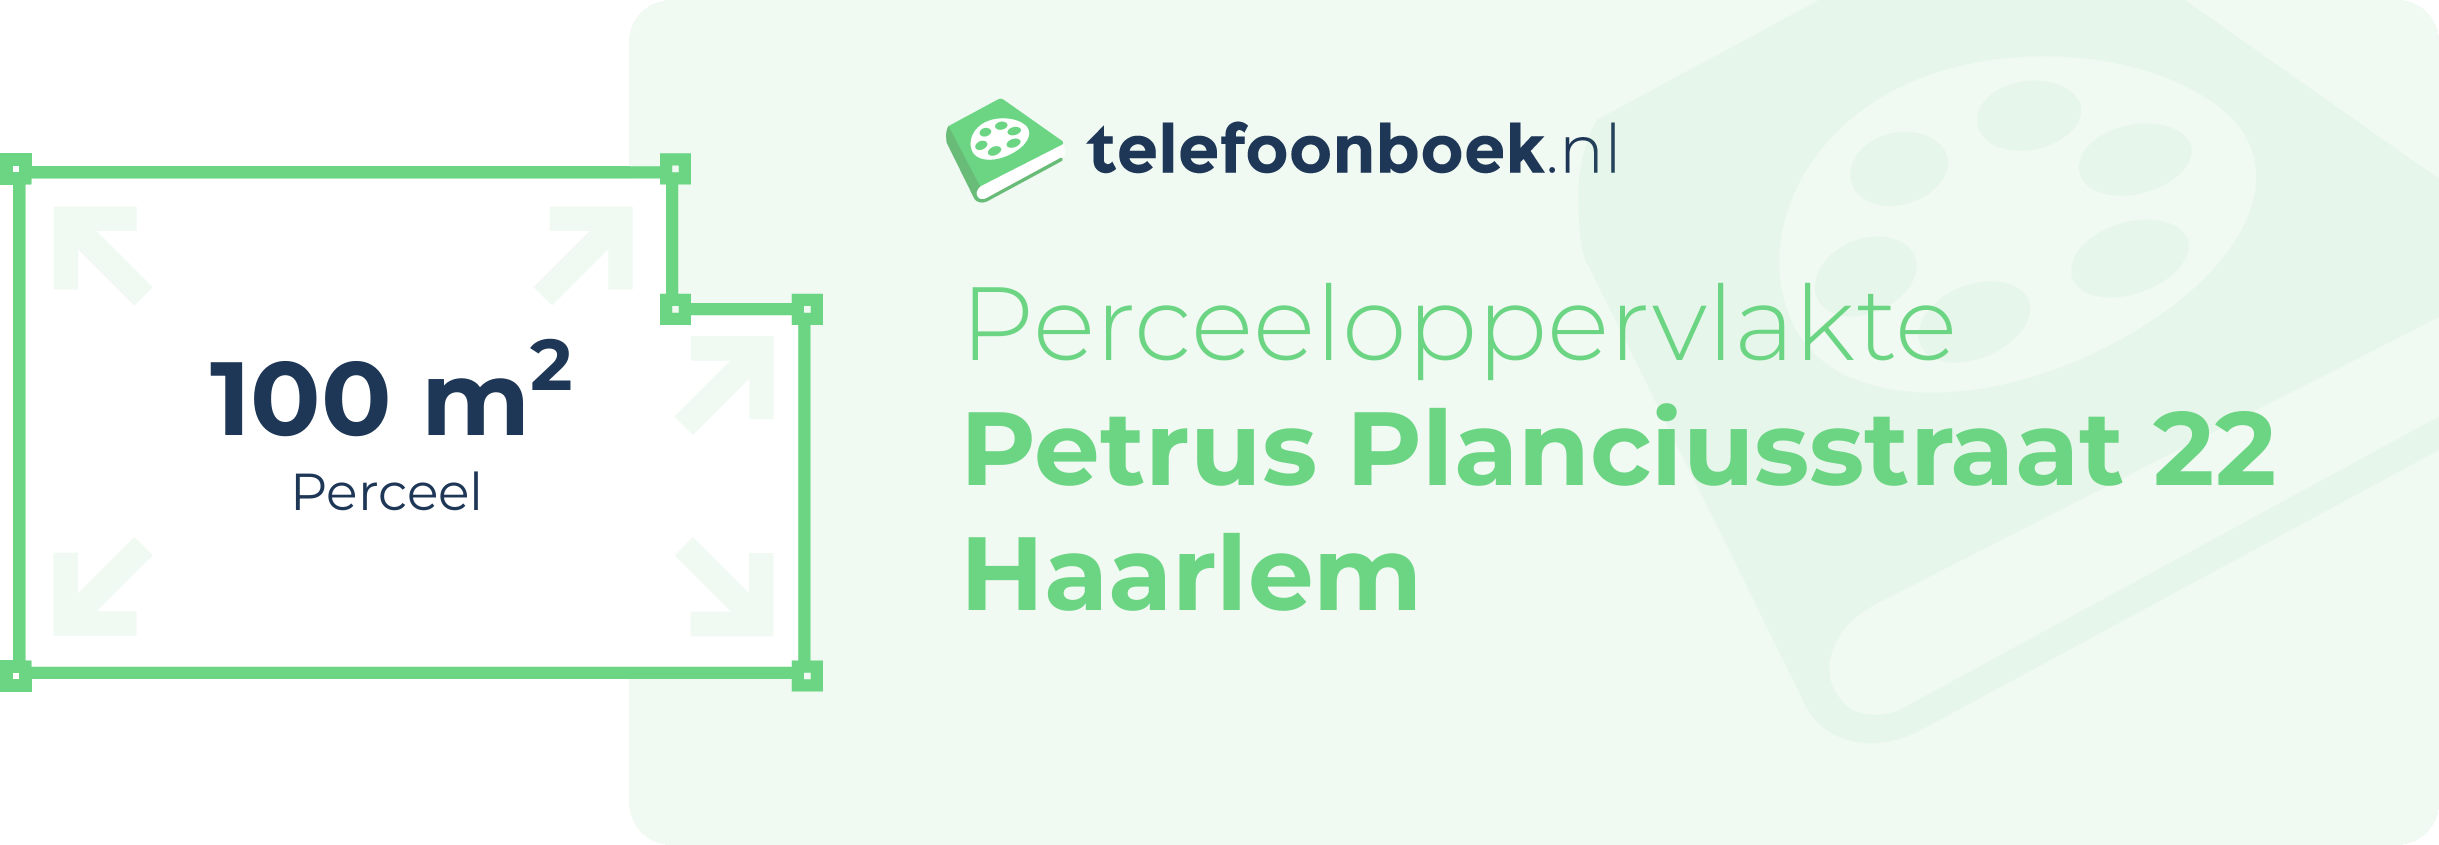 Perceeloppervlakte Petrus Planciusstraat 22 Haarlem